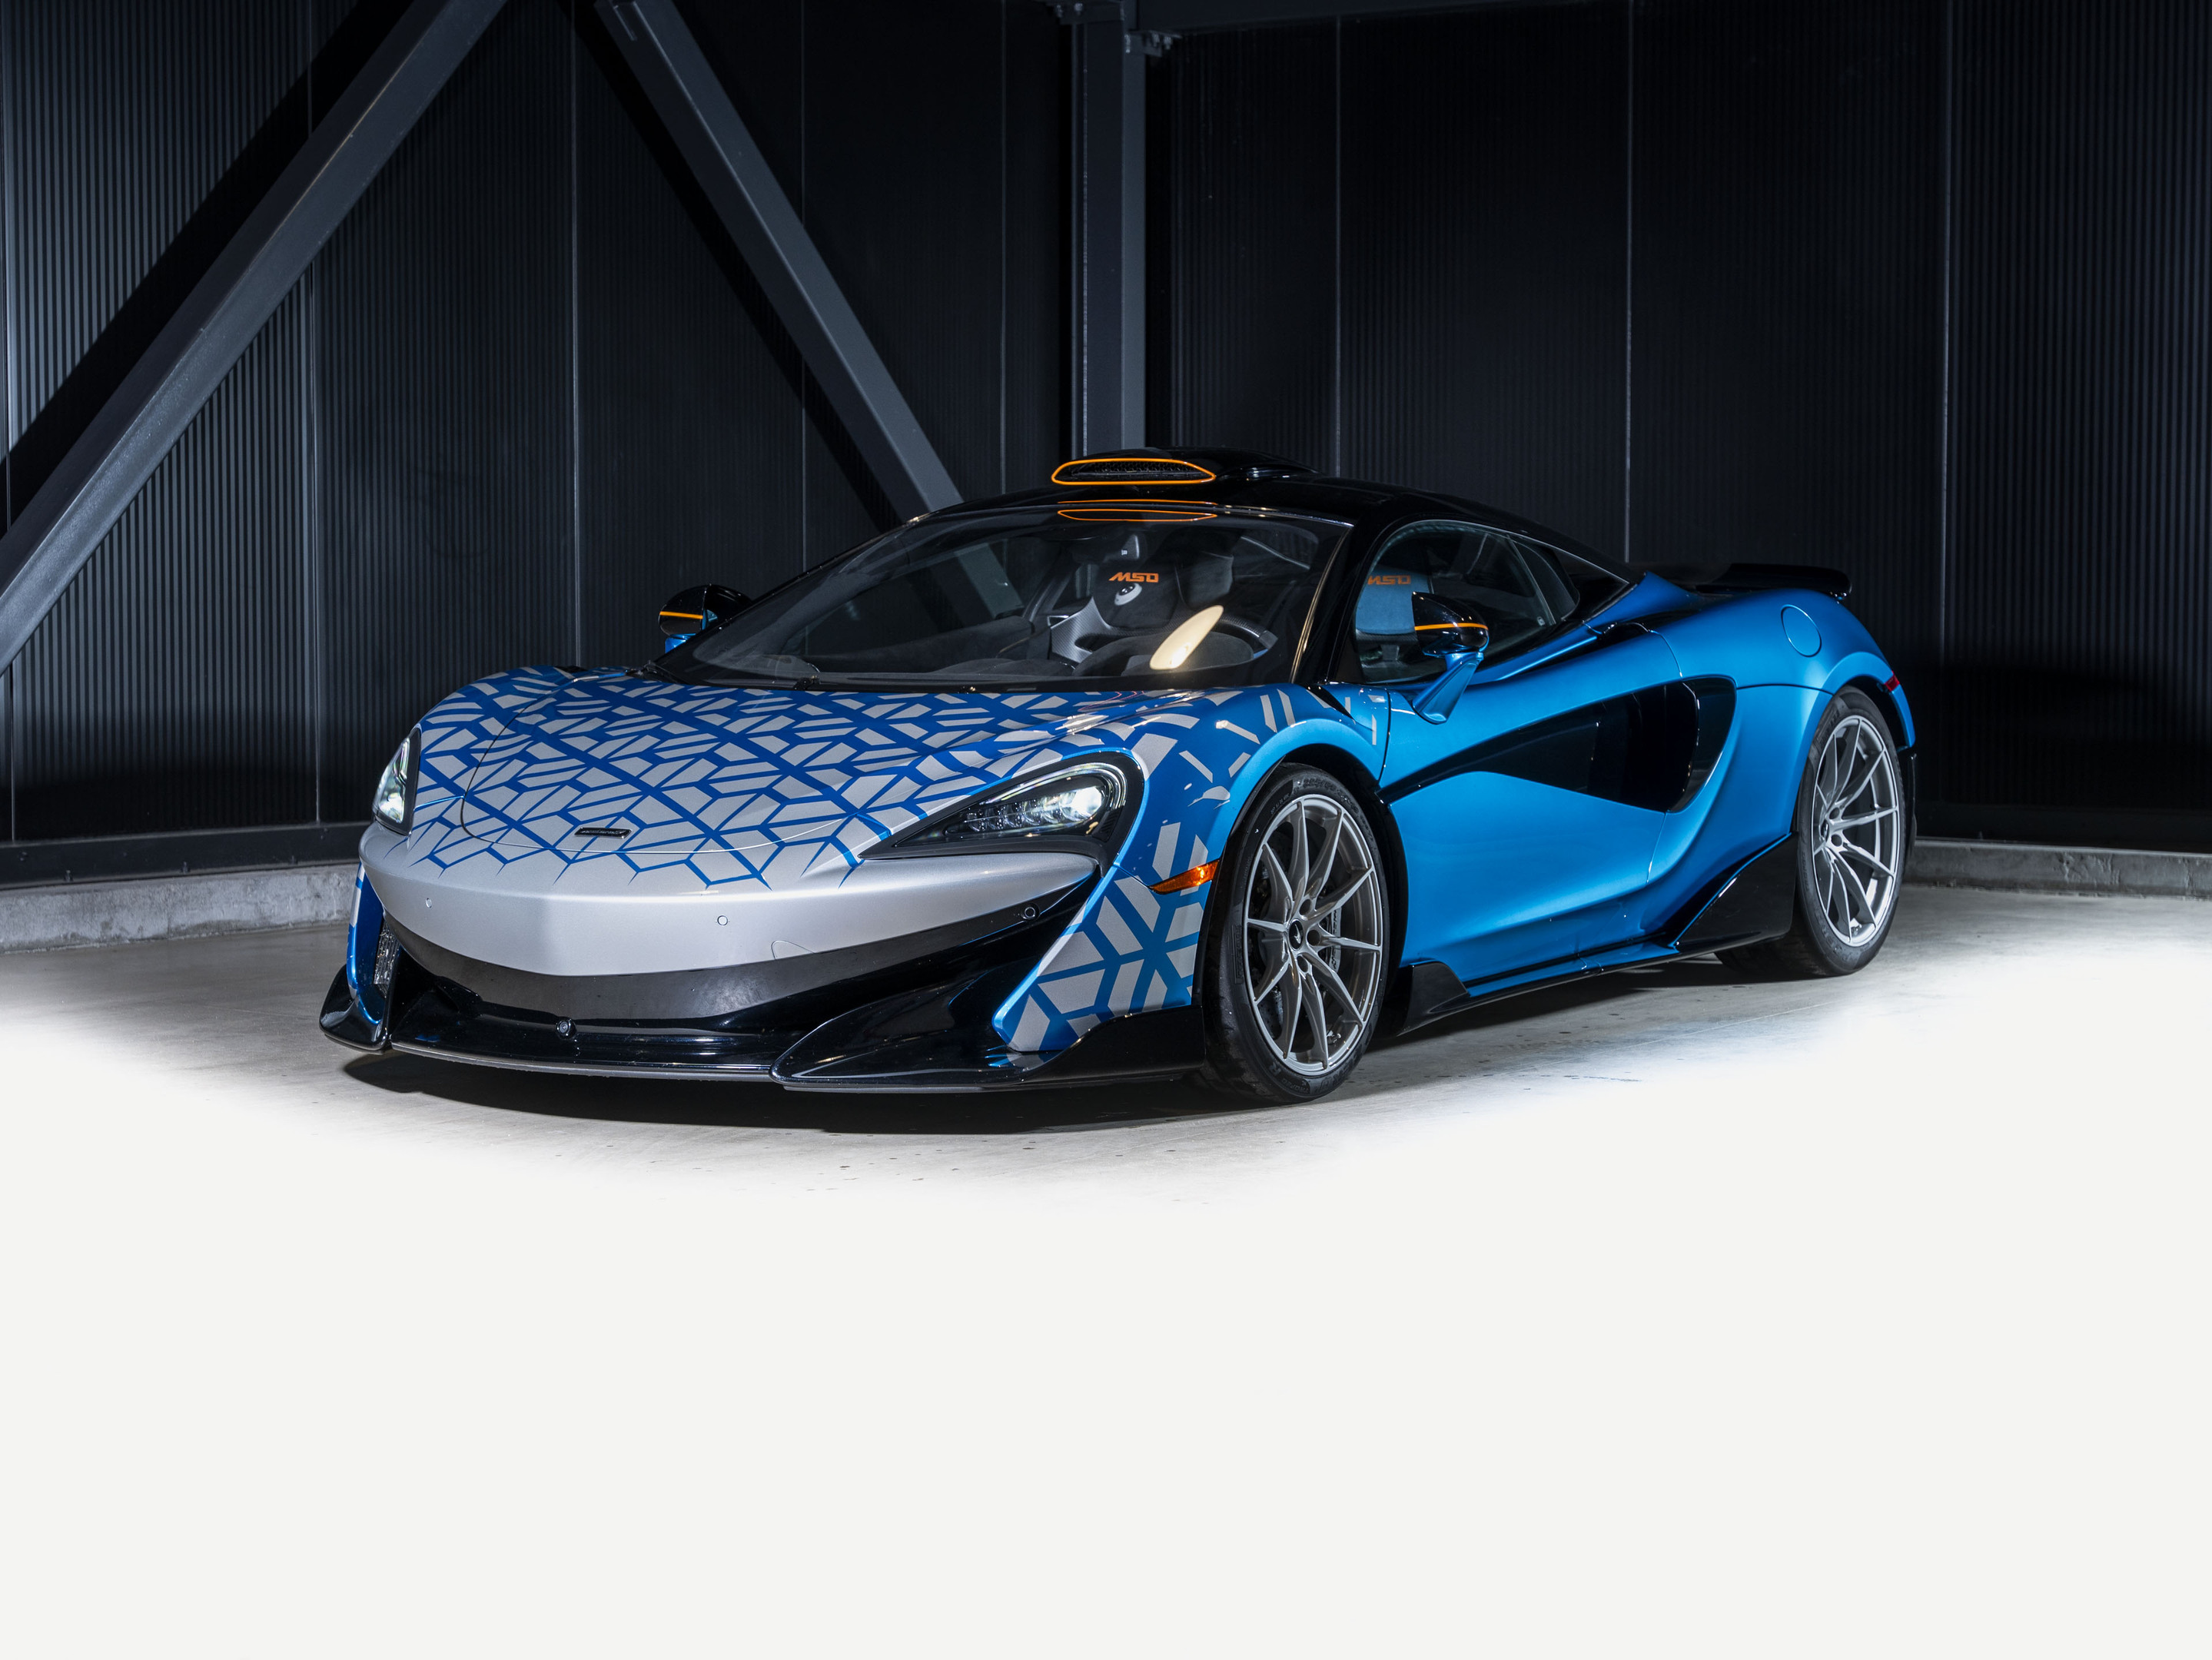 2019 McLaren 600LT Dragon Blu 1 of 1 MSO 600LT commission